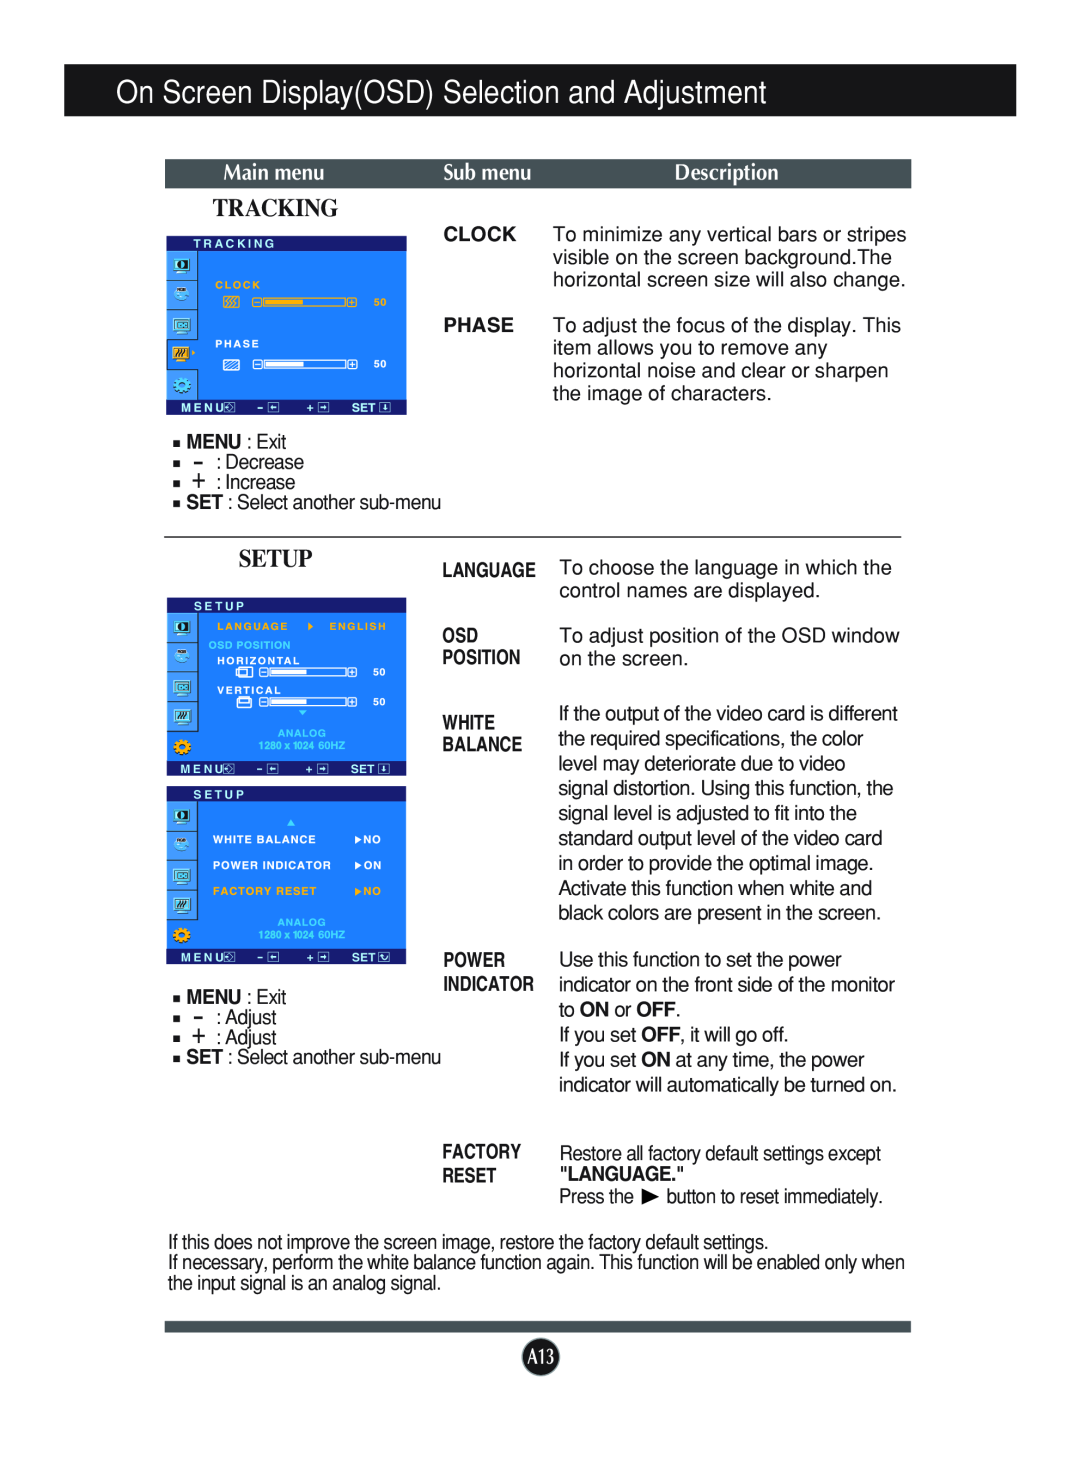 LG Electronics L1940P Tracking, Sub menu, On Screen DisplayOSD Selection and Adjustment, Main menu, Description, MENU Exit 